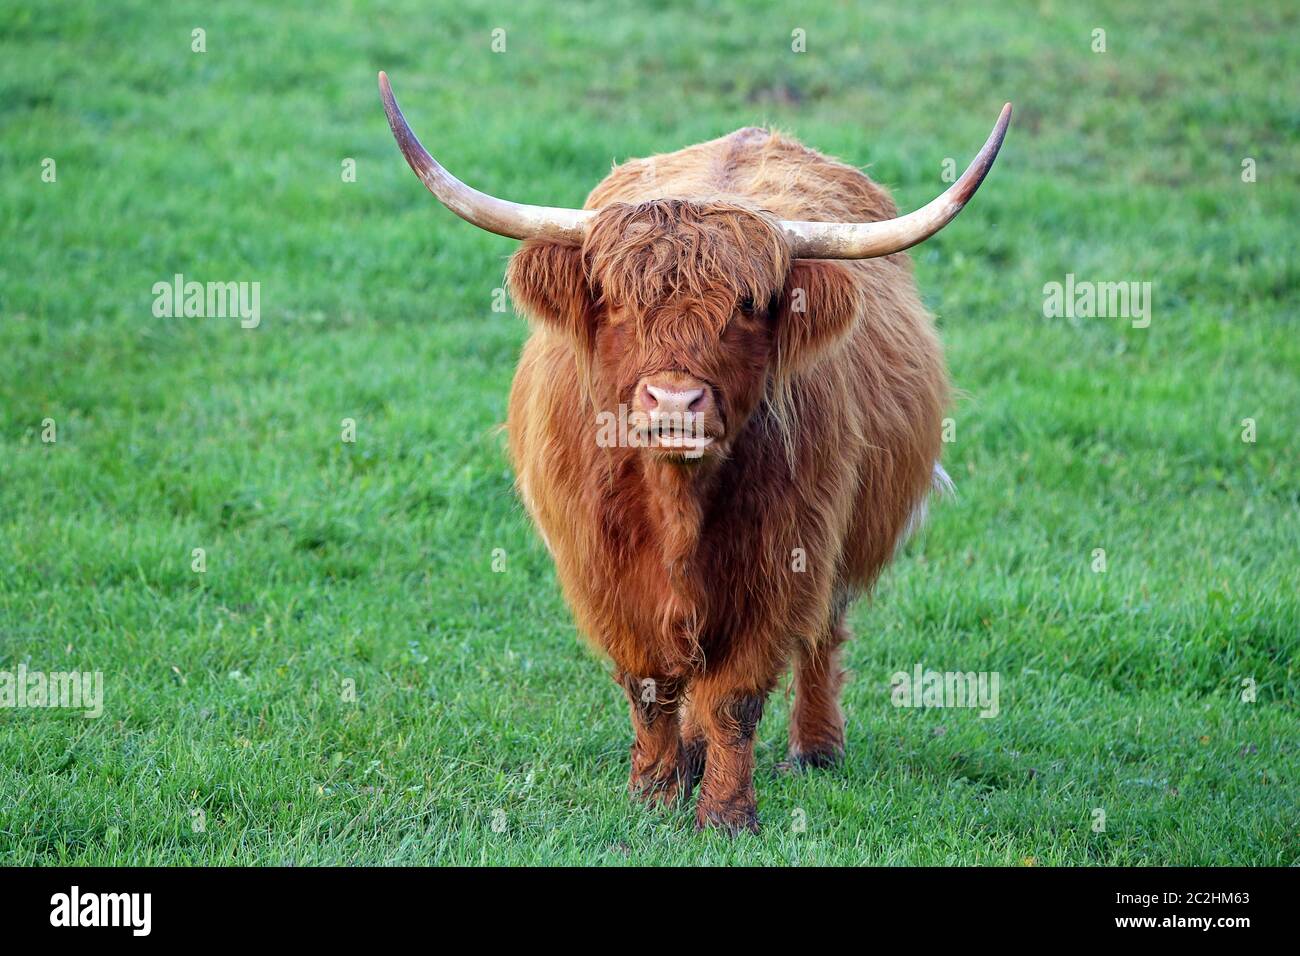 Highland beef or Kyloe Stock Photo